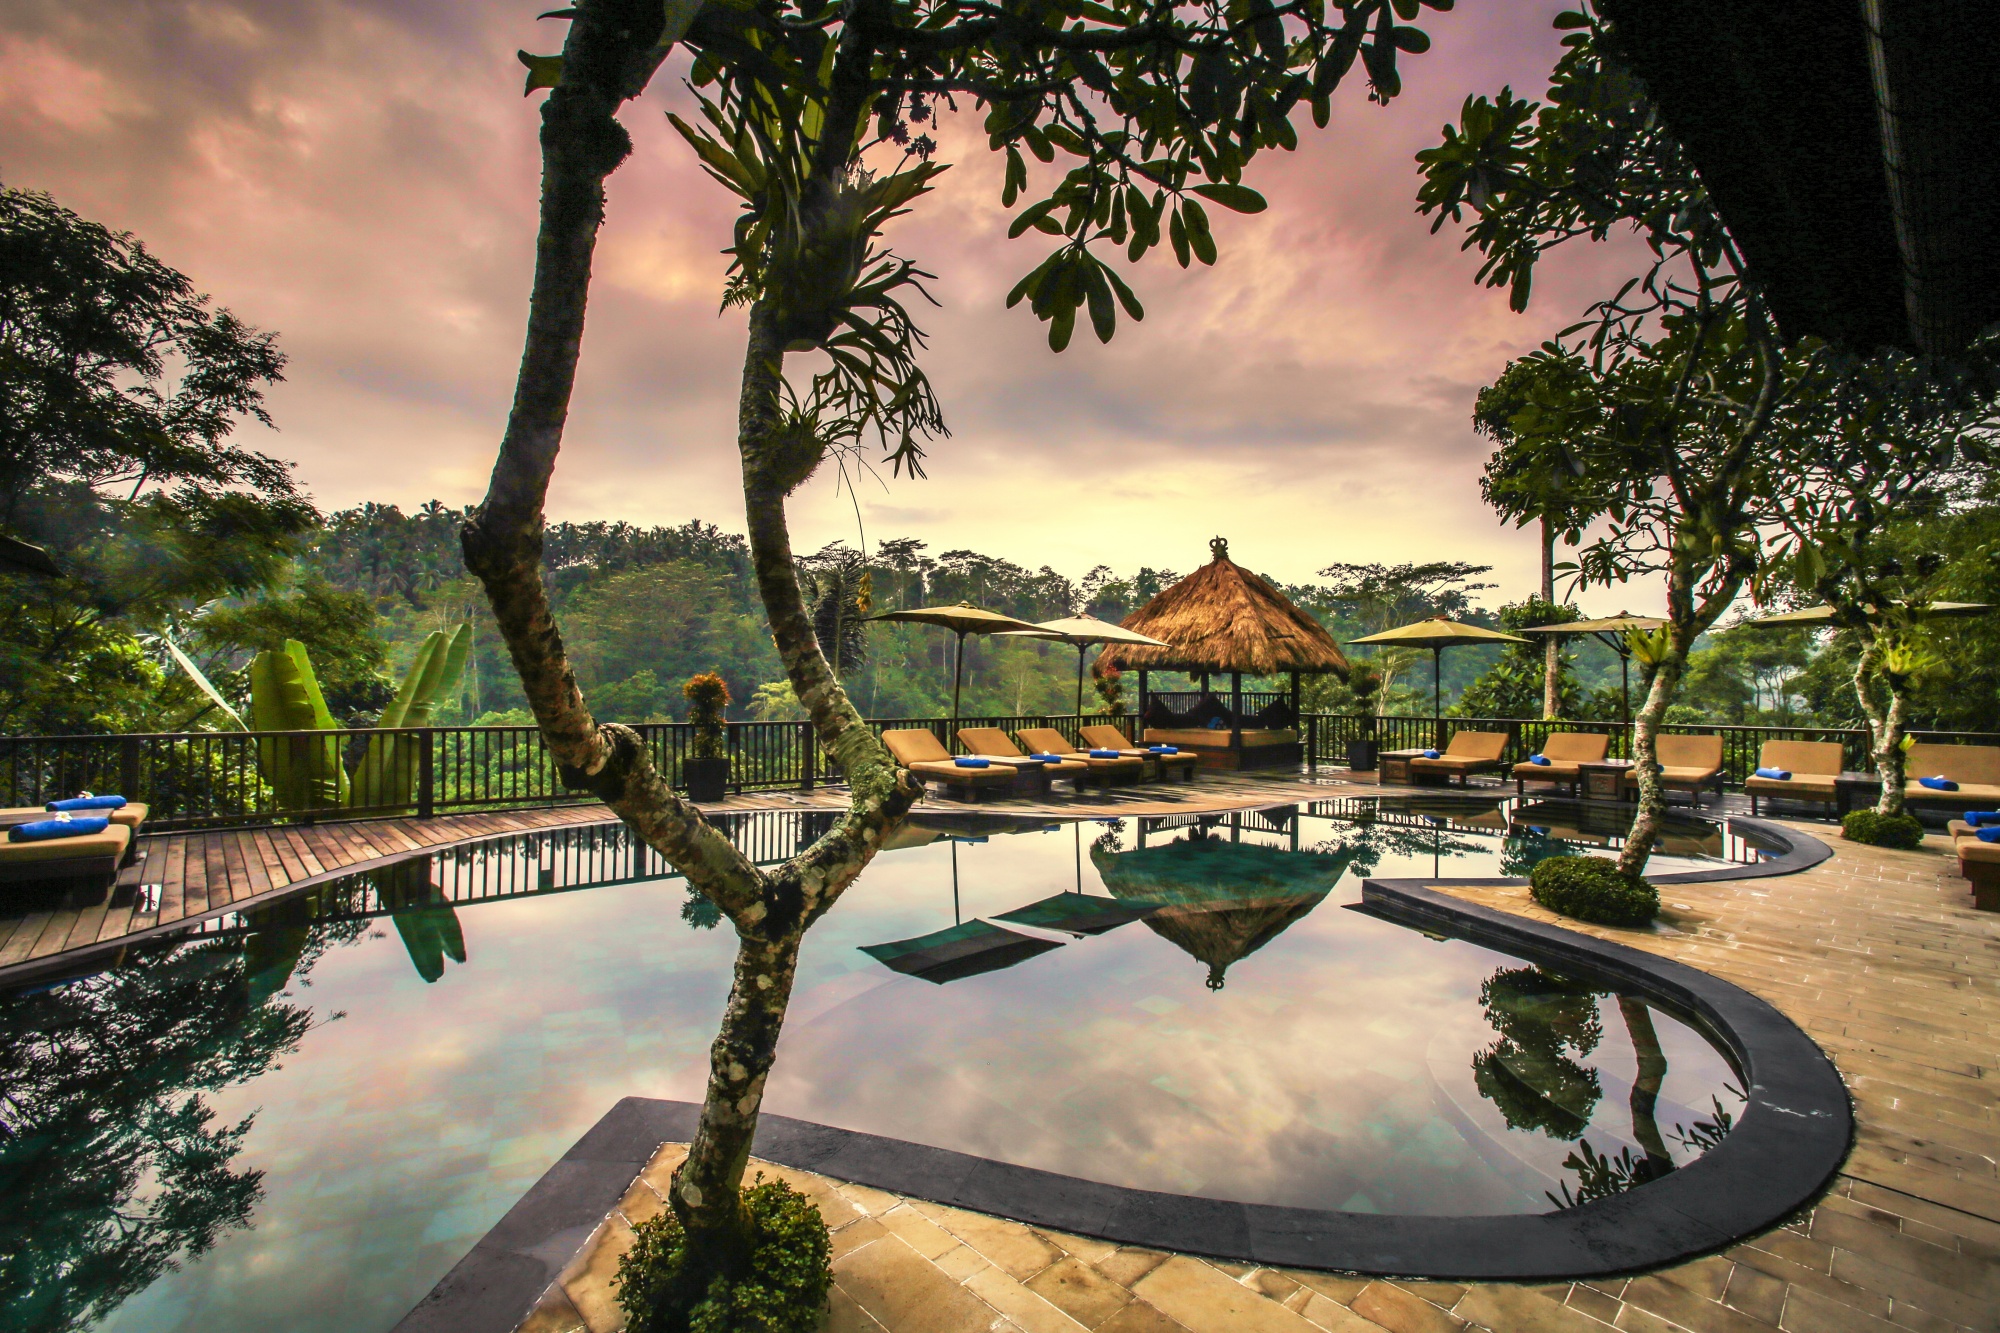 jungle resorts tourism